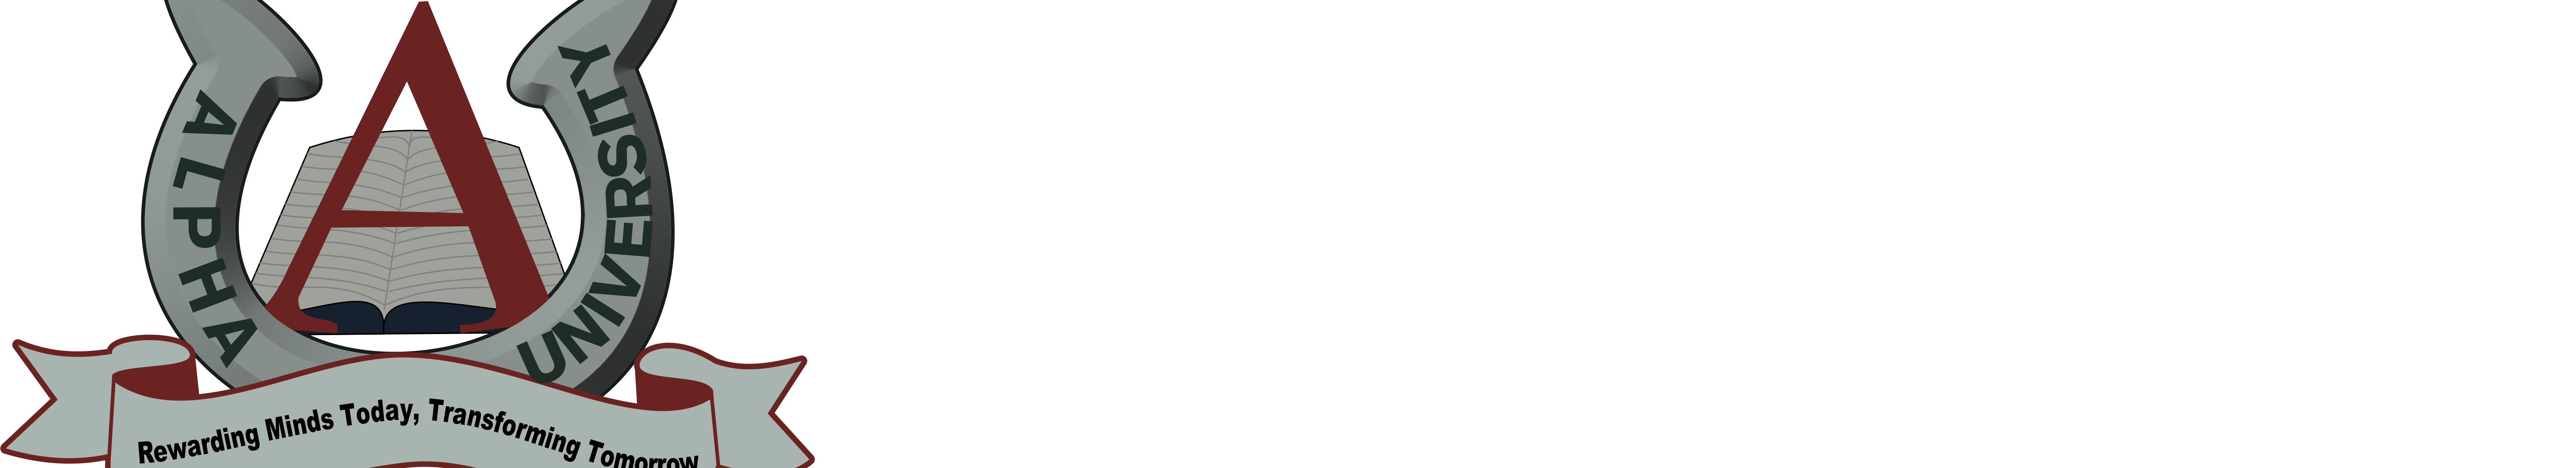 Proposed Alpha University.